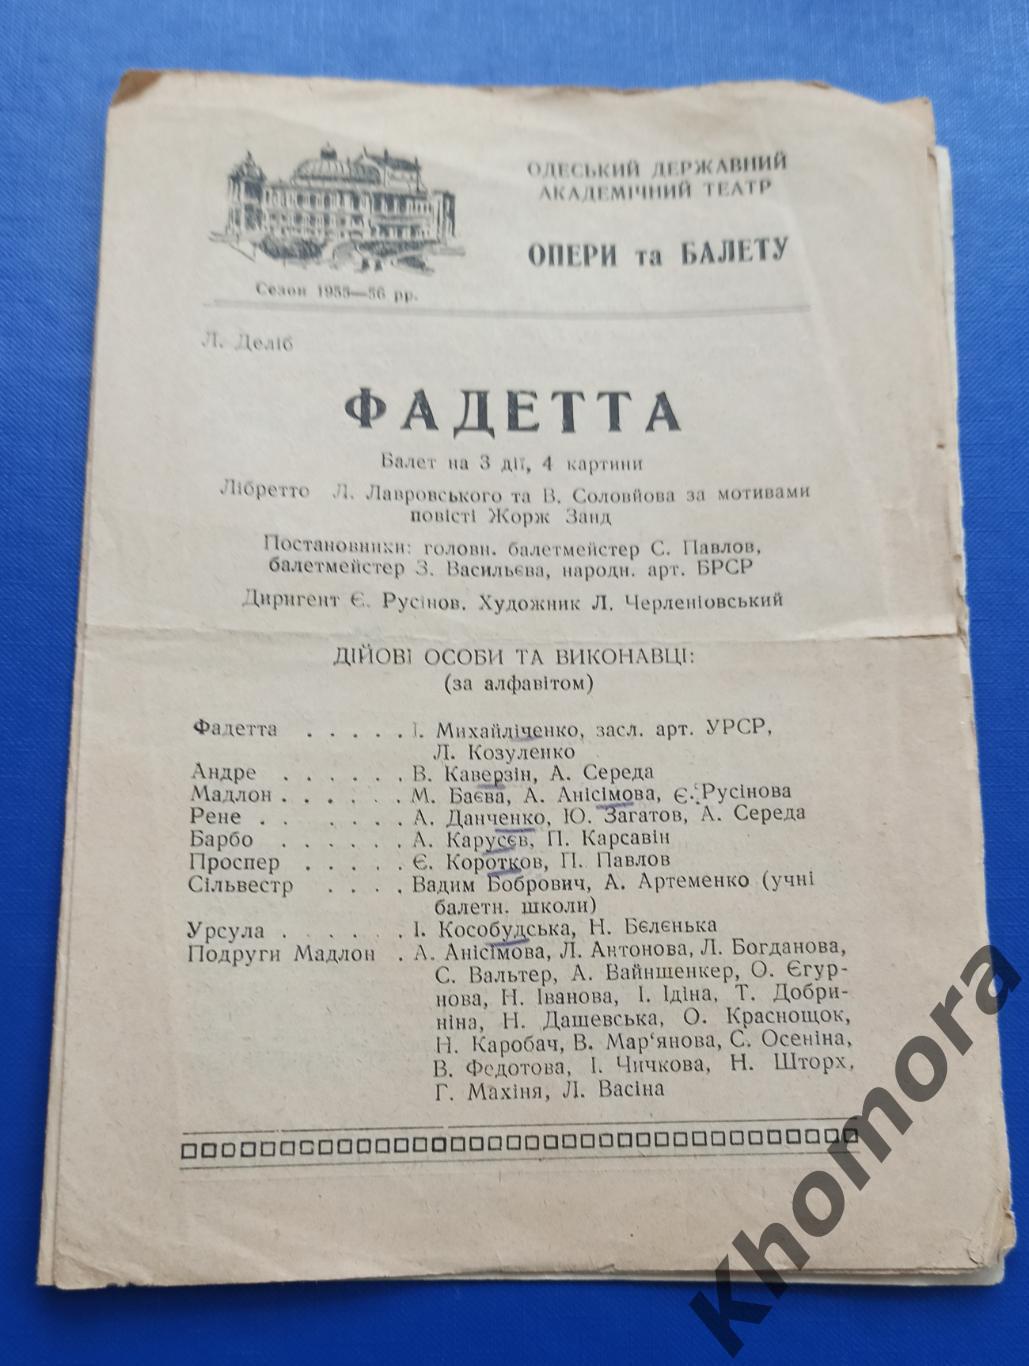 Одесский театр оперы и балета - Фадетта сезон-1955/56 - программа